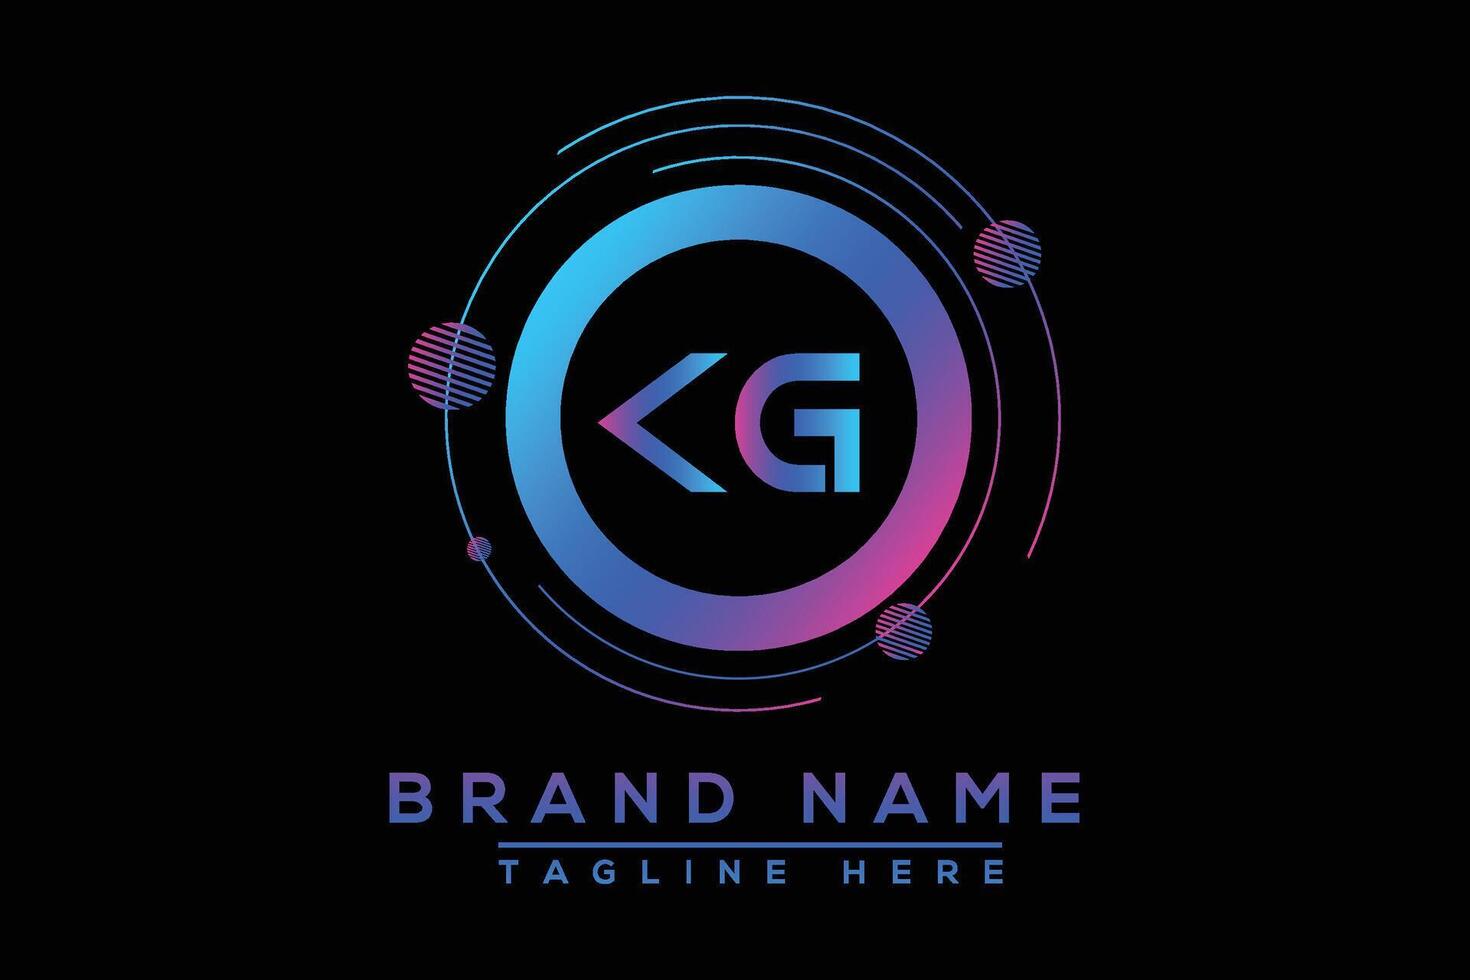 KG letter logo design. Vector logo design for business.